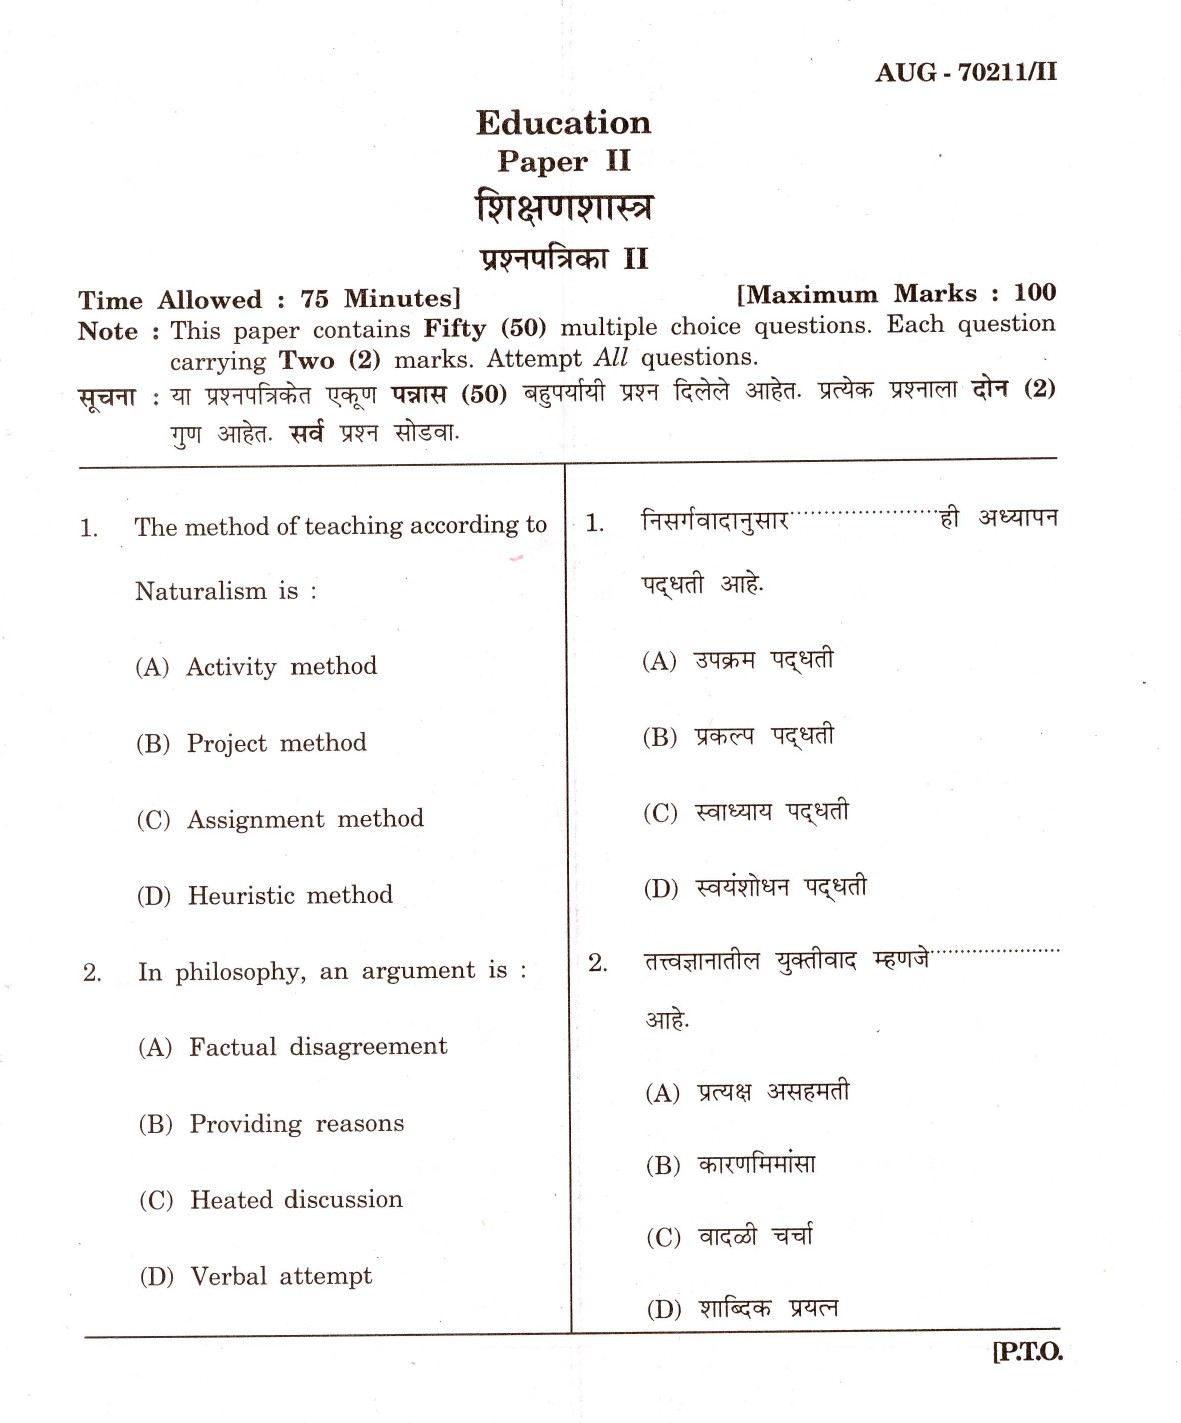 Maharashtra SET Education Question Paper II August 2011 1